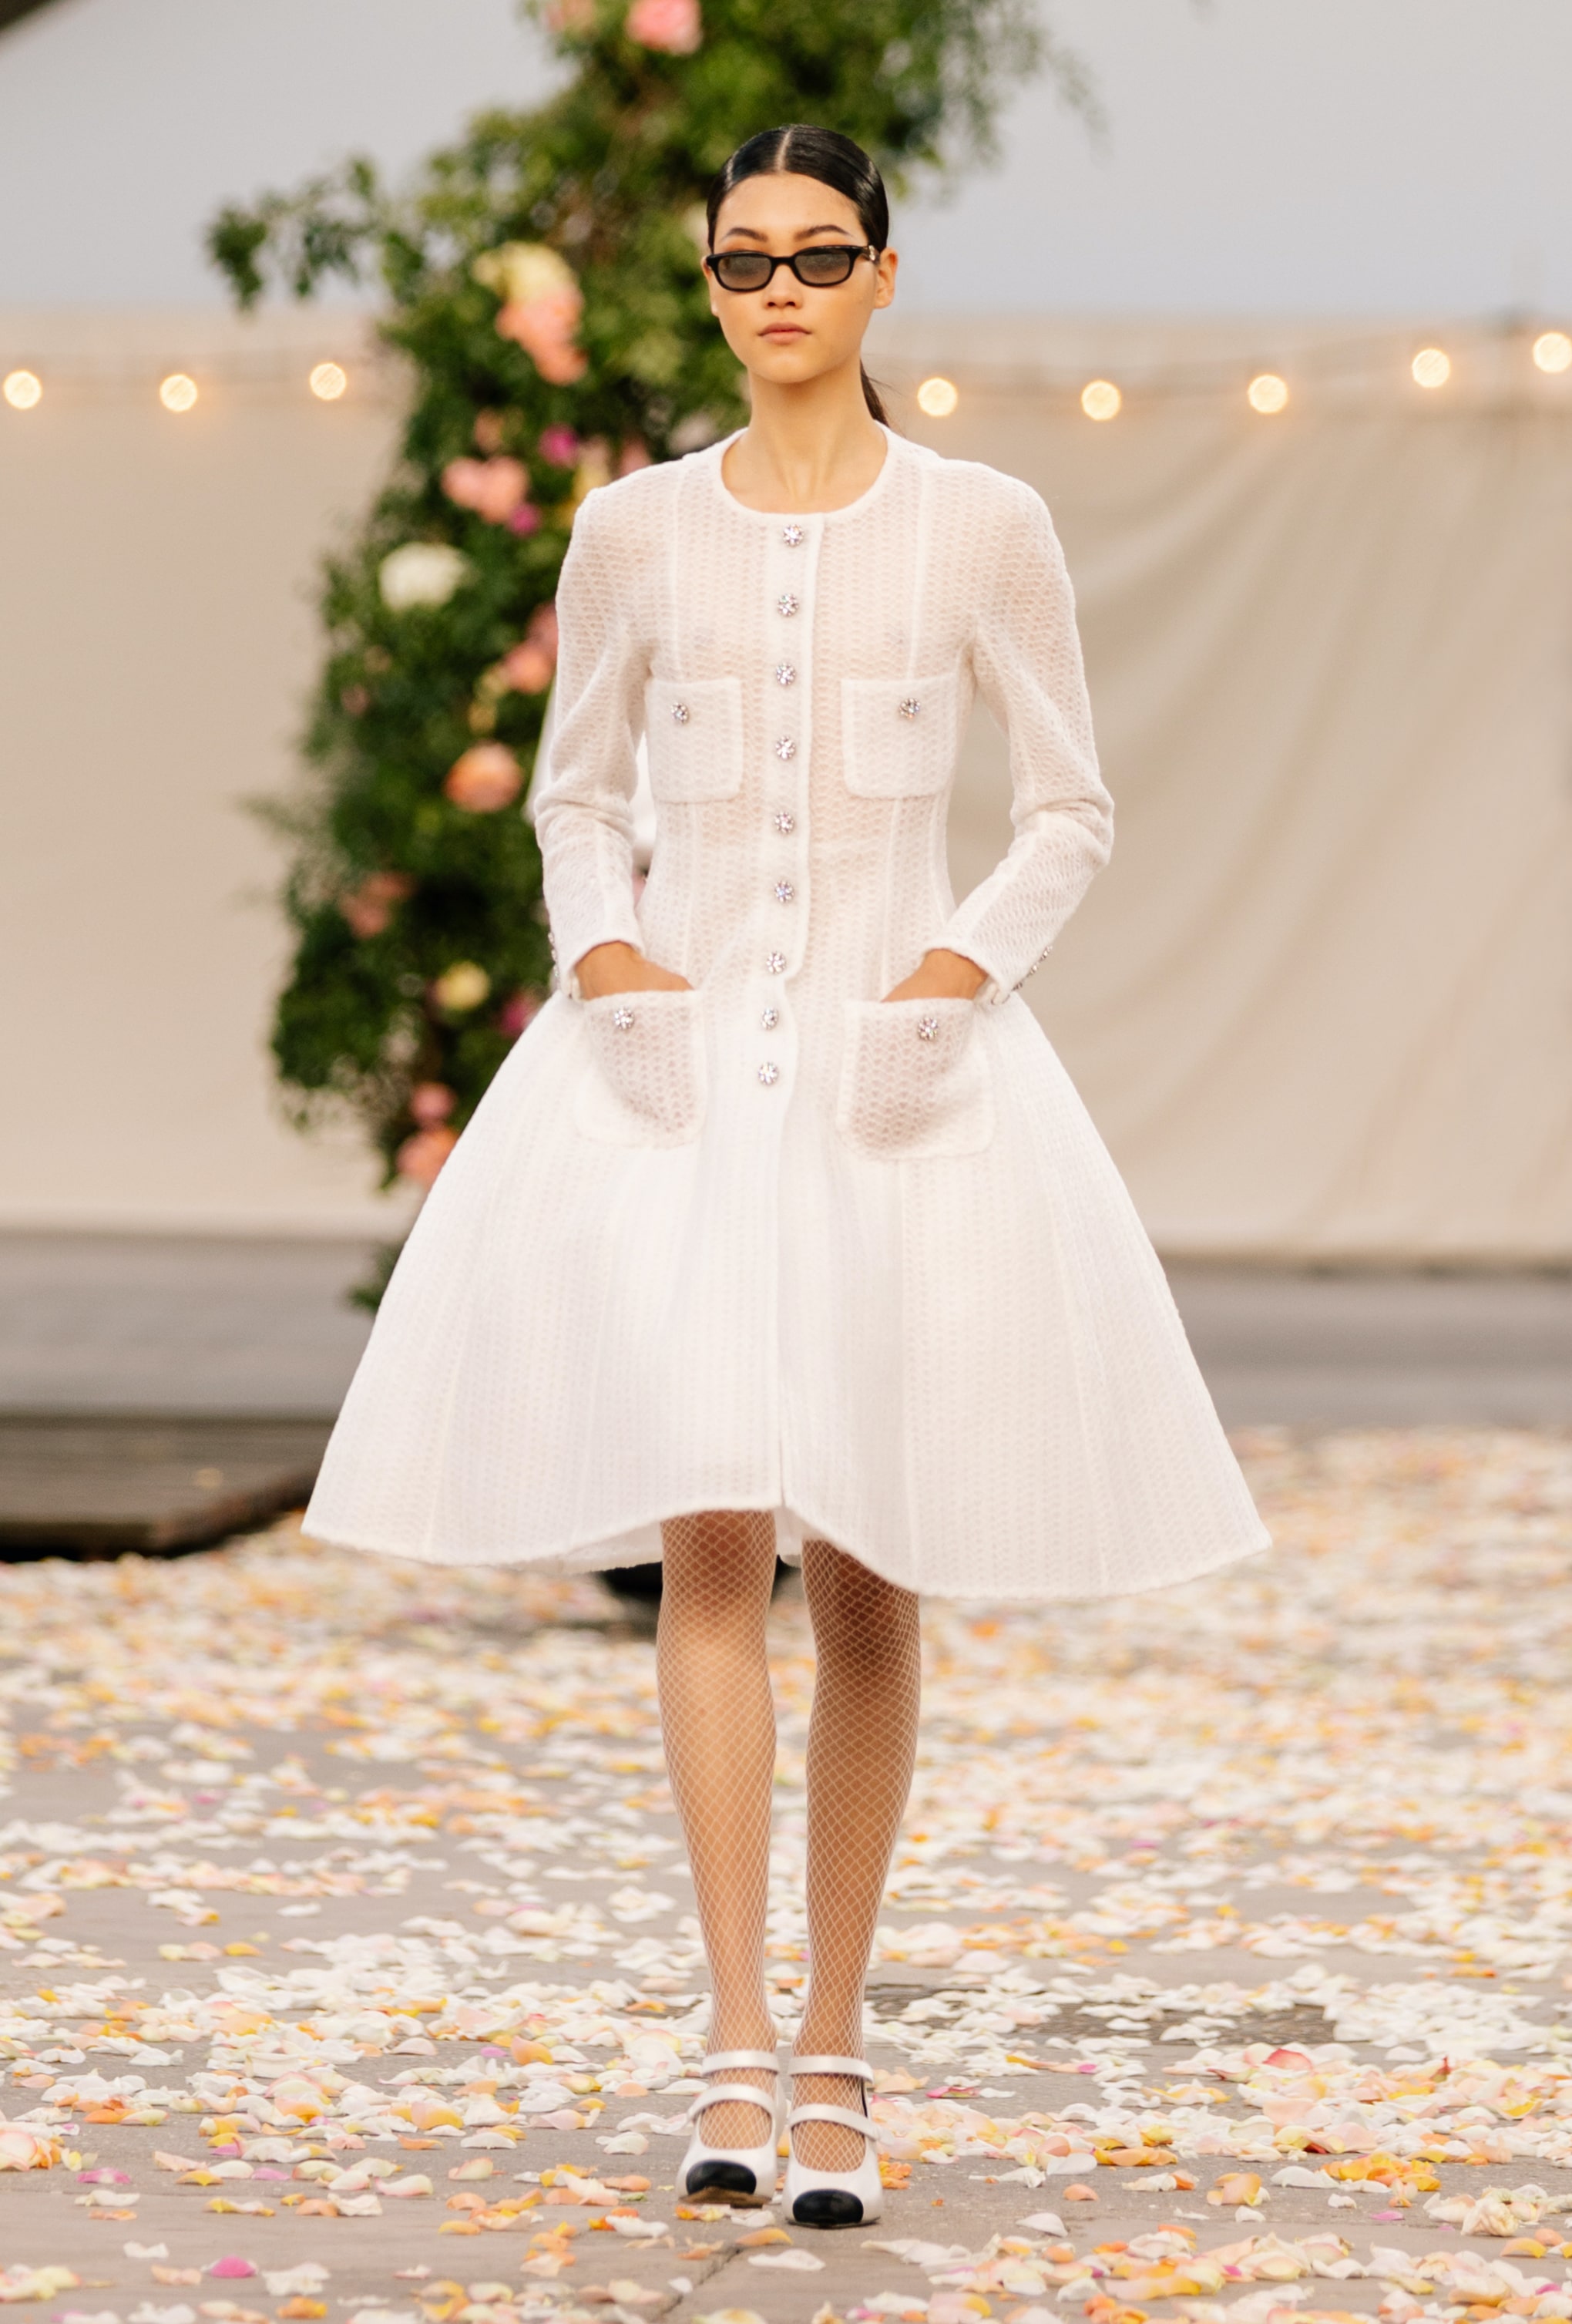 Chanel celebra a la Alta Costura con su colección primavera-verano 2021